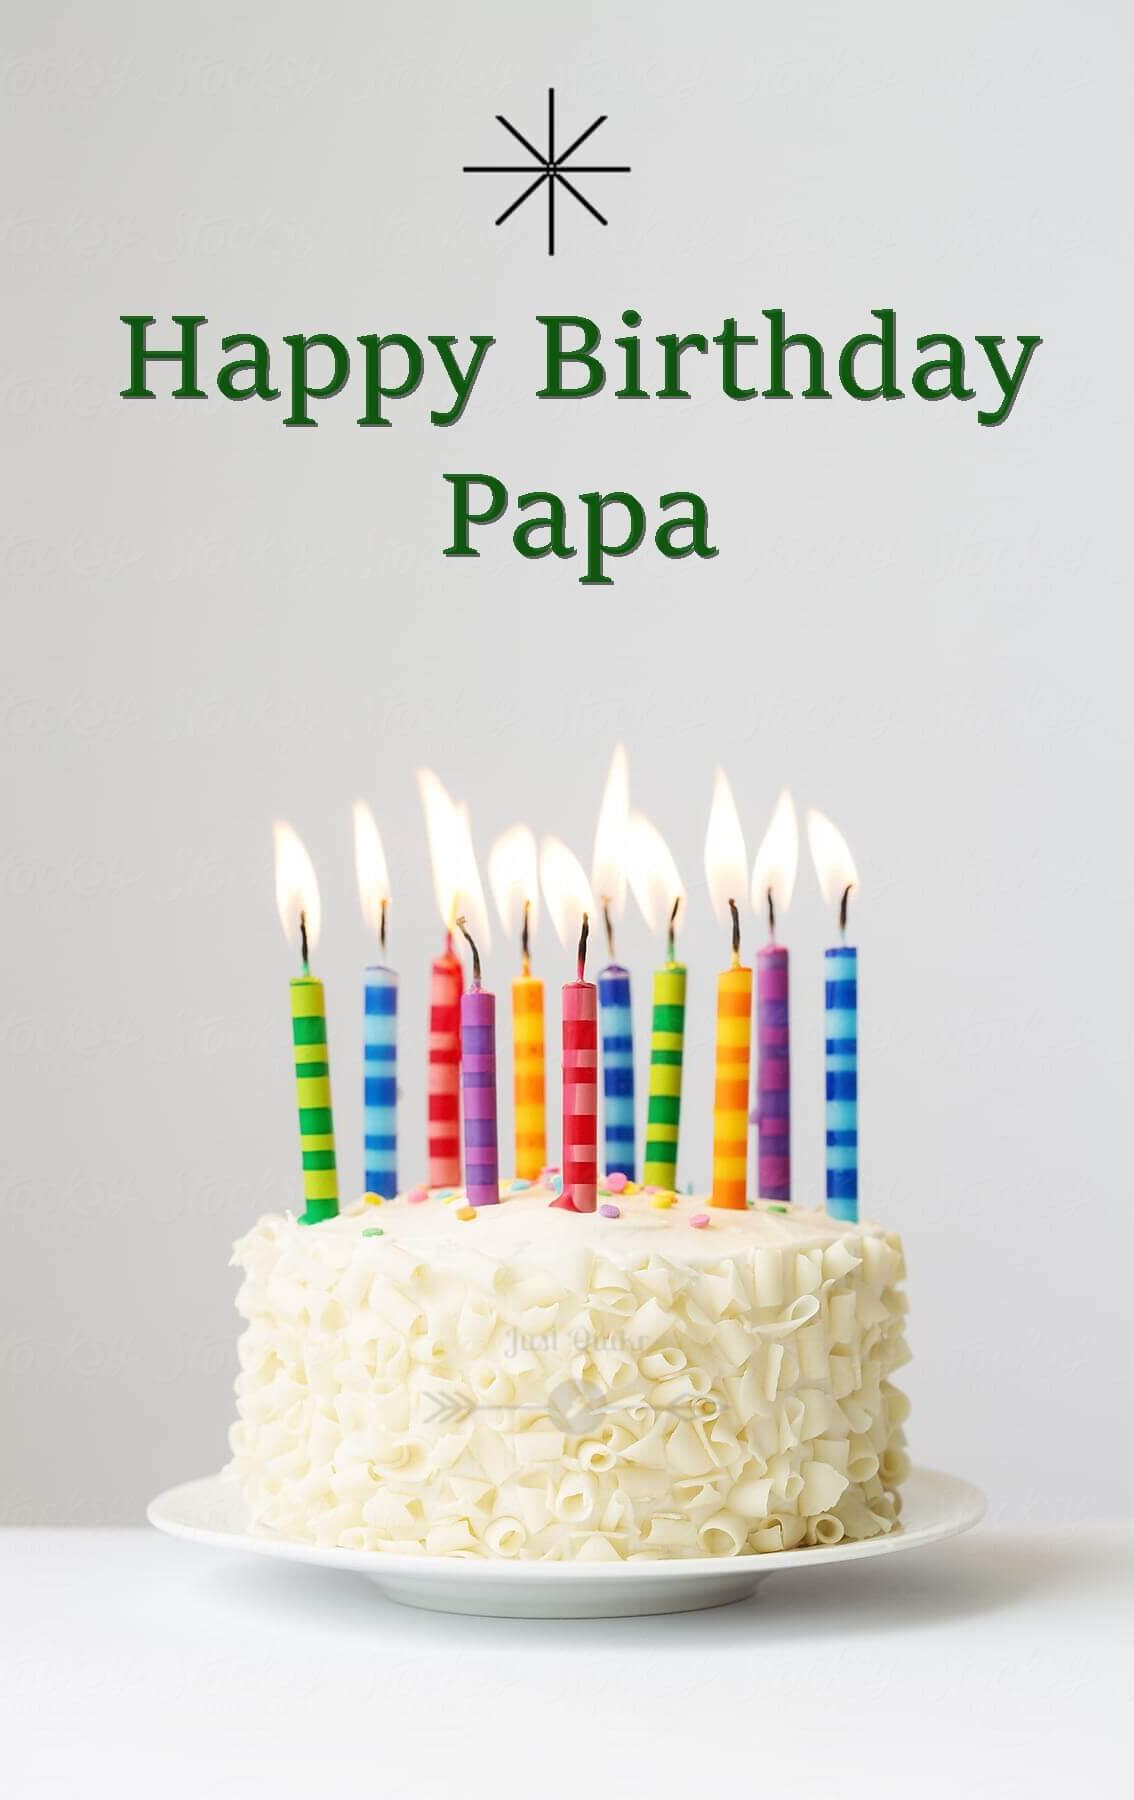 Happy Birthday Shayari HD Pics Image for Papa